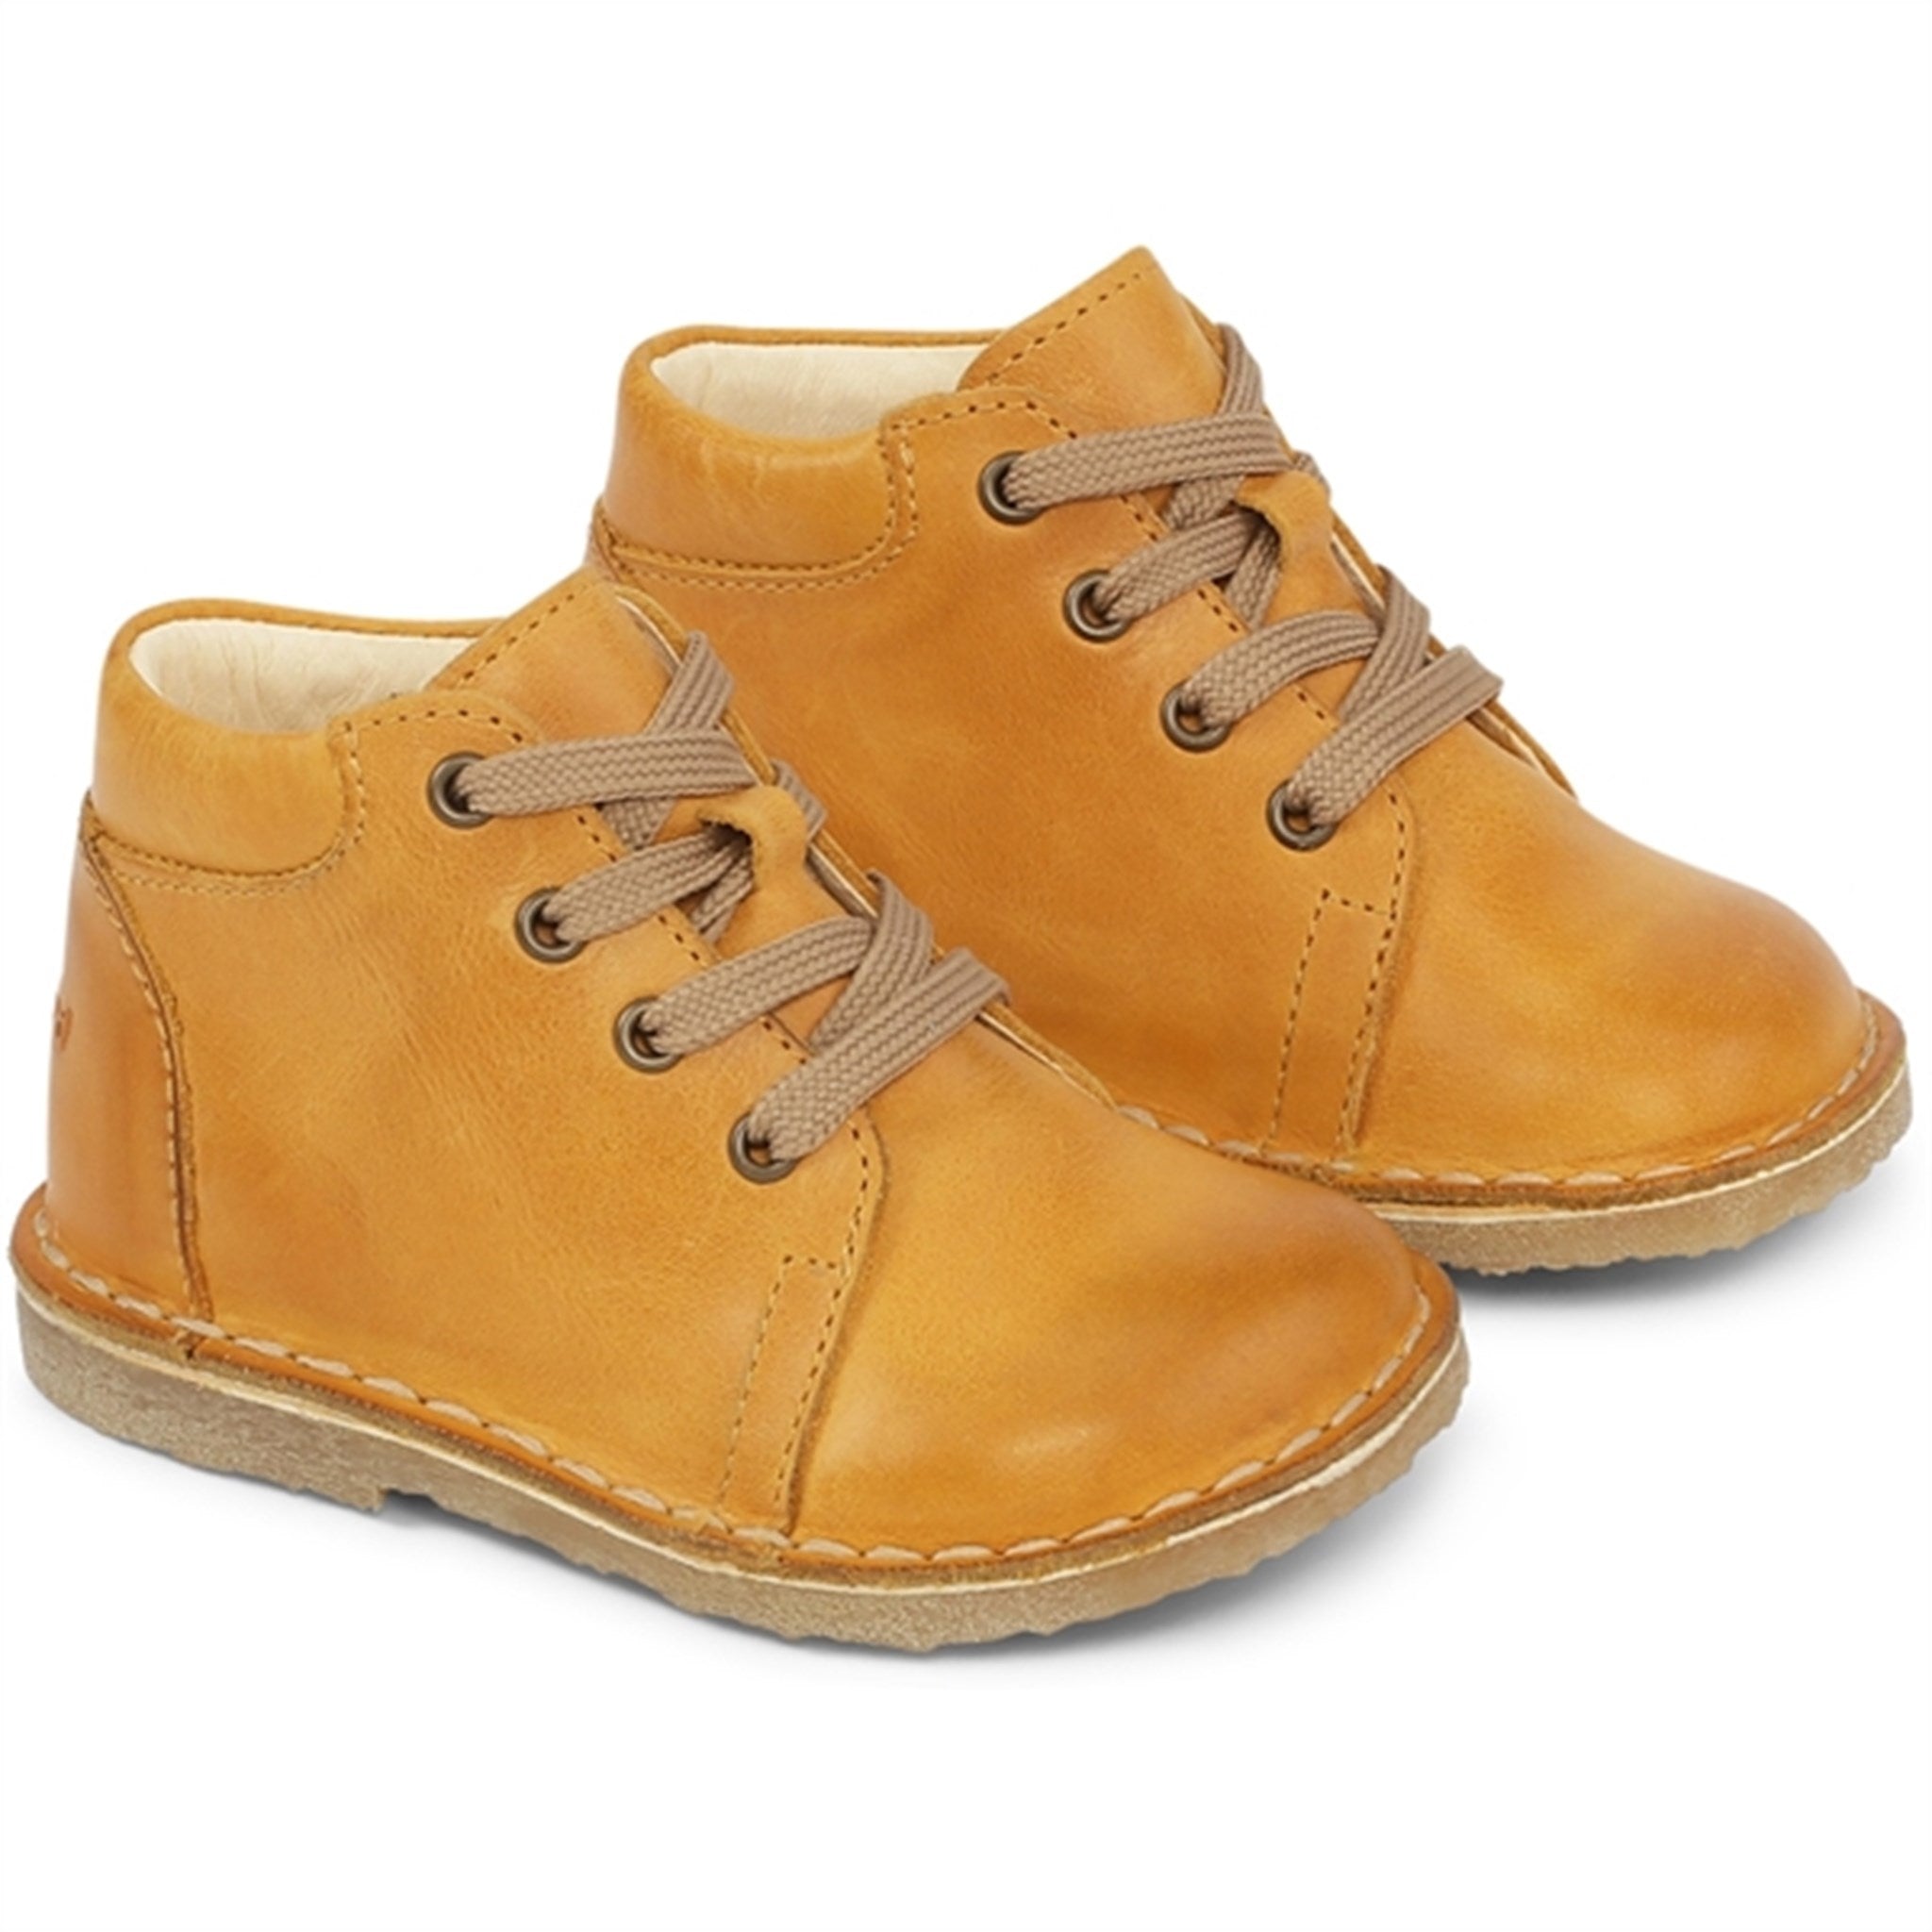 Bundgaard Oma Lace Yellow WS Shoe